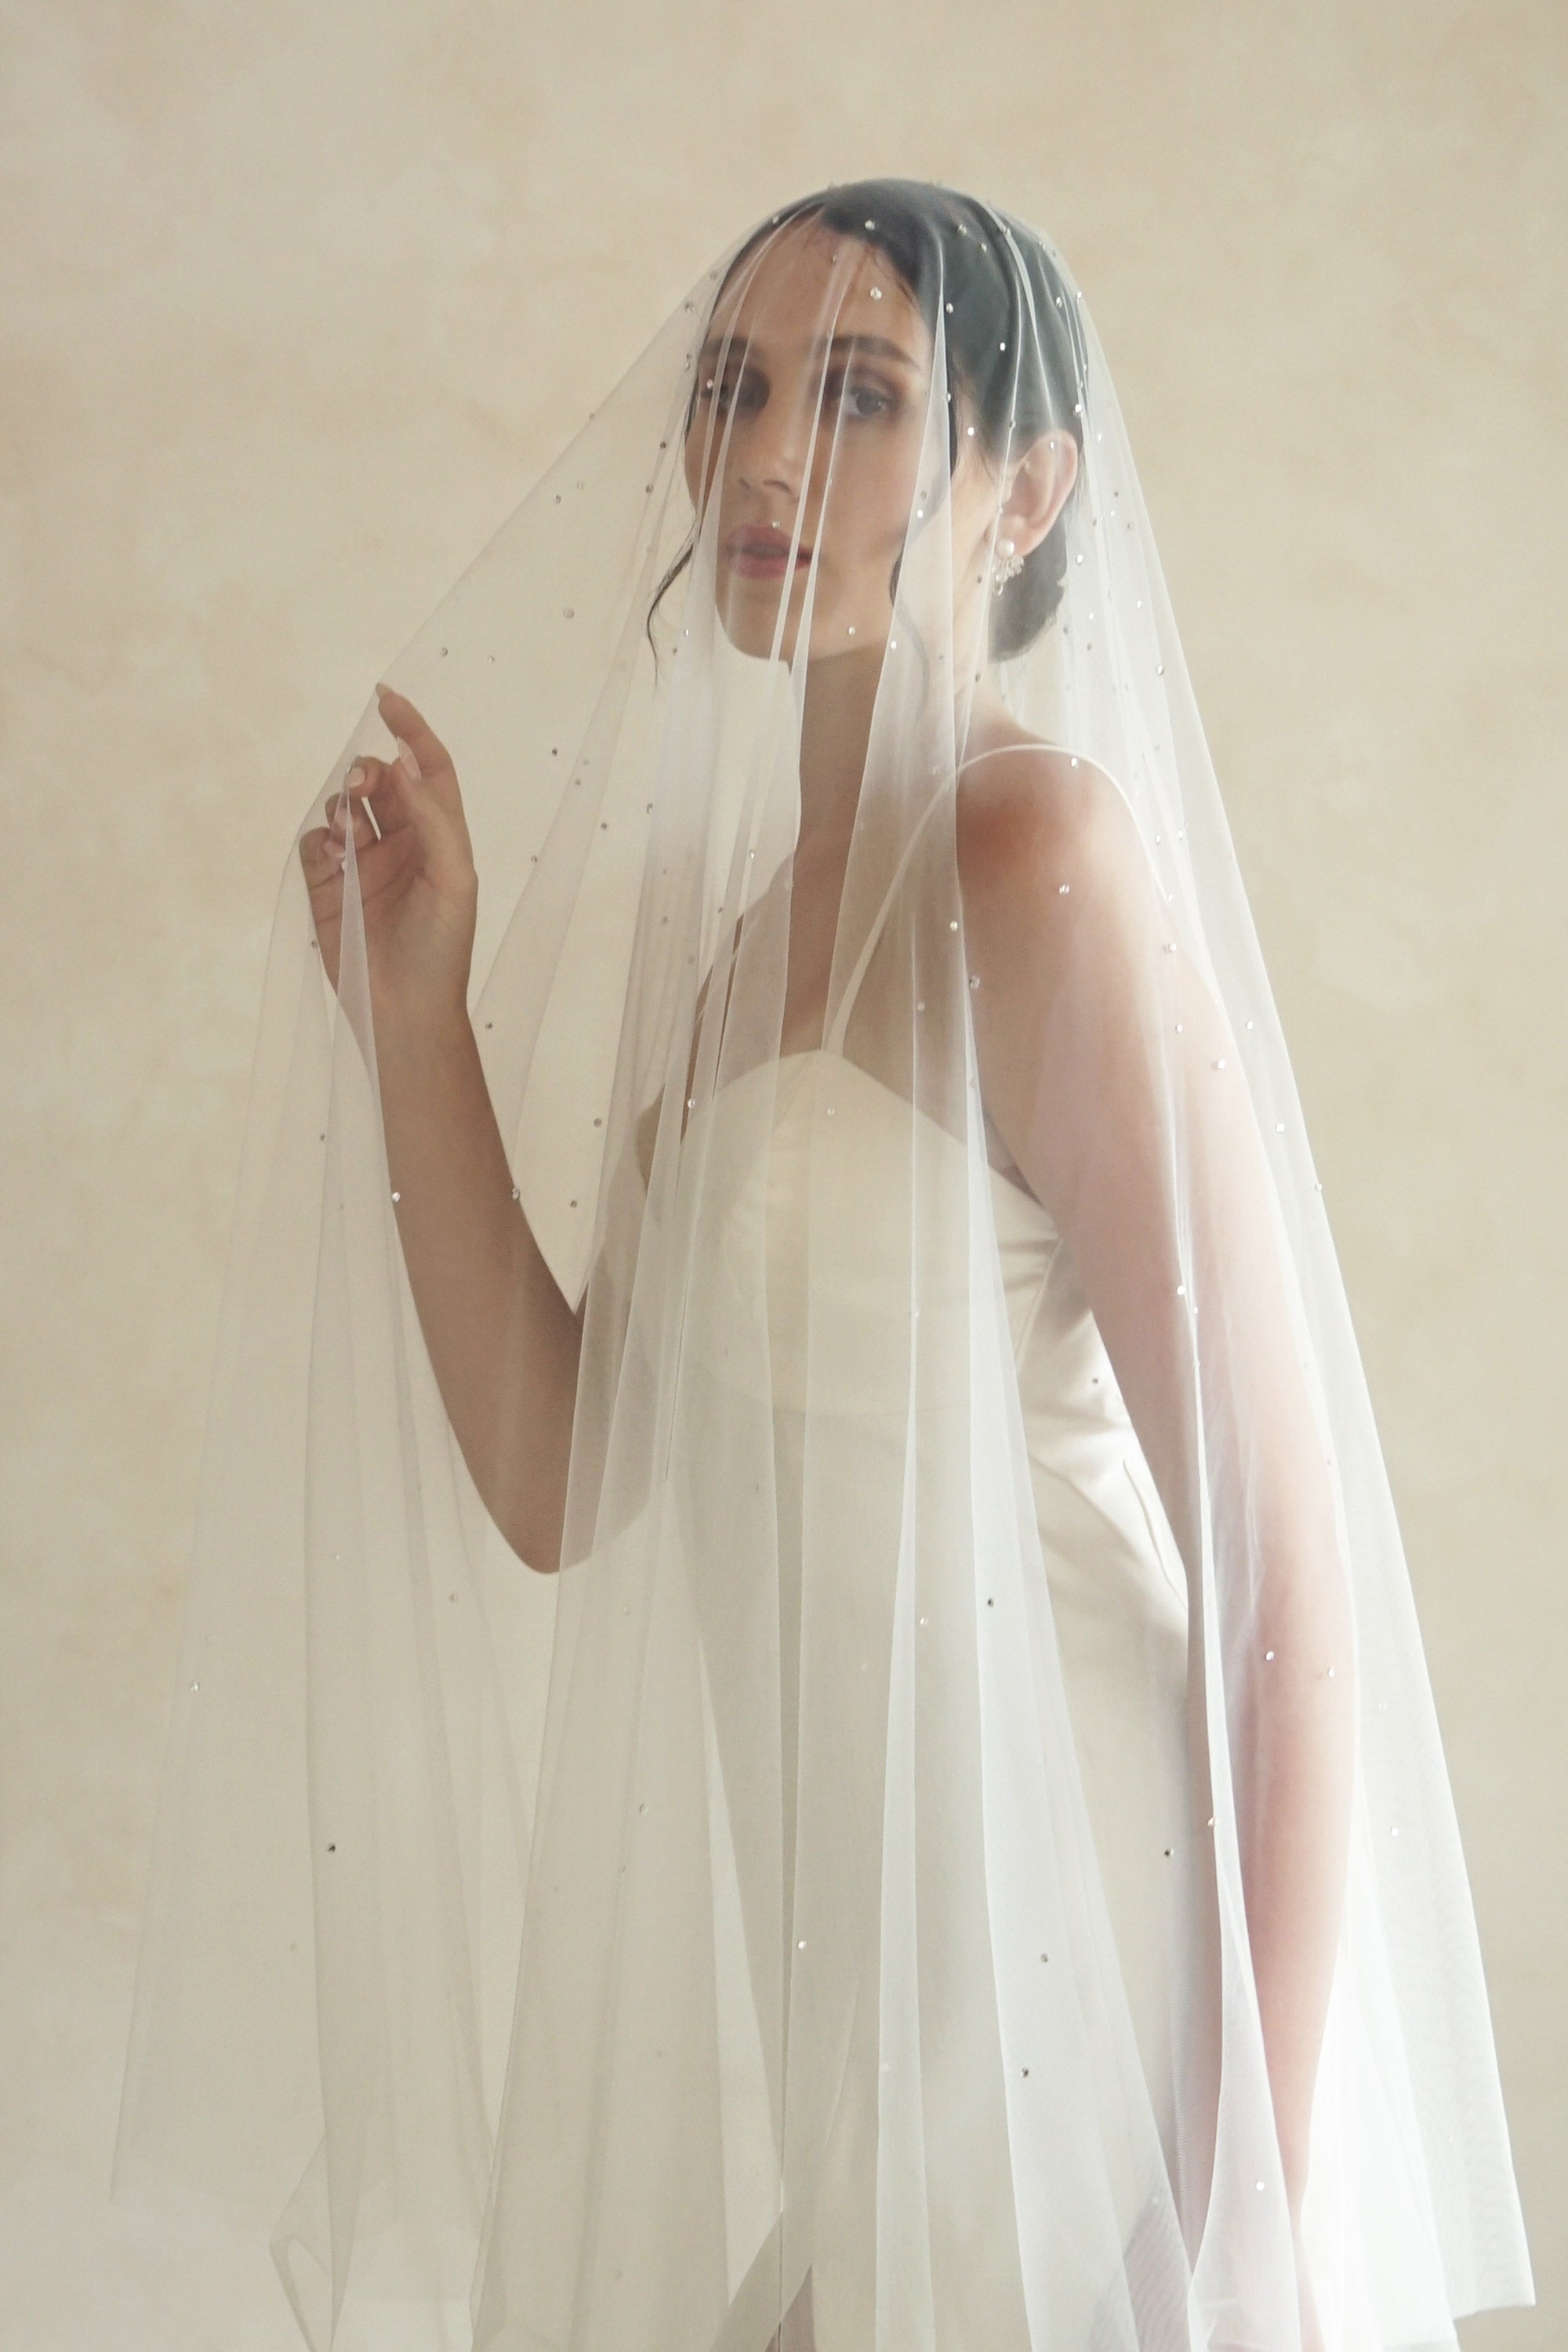 Handcrafted Wedding Veils Australia